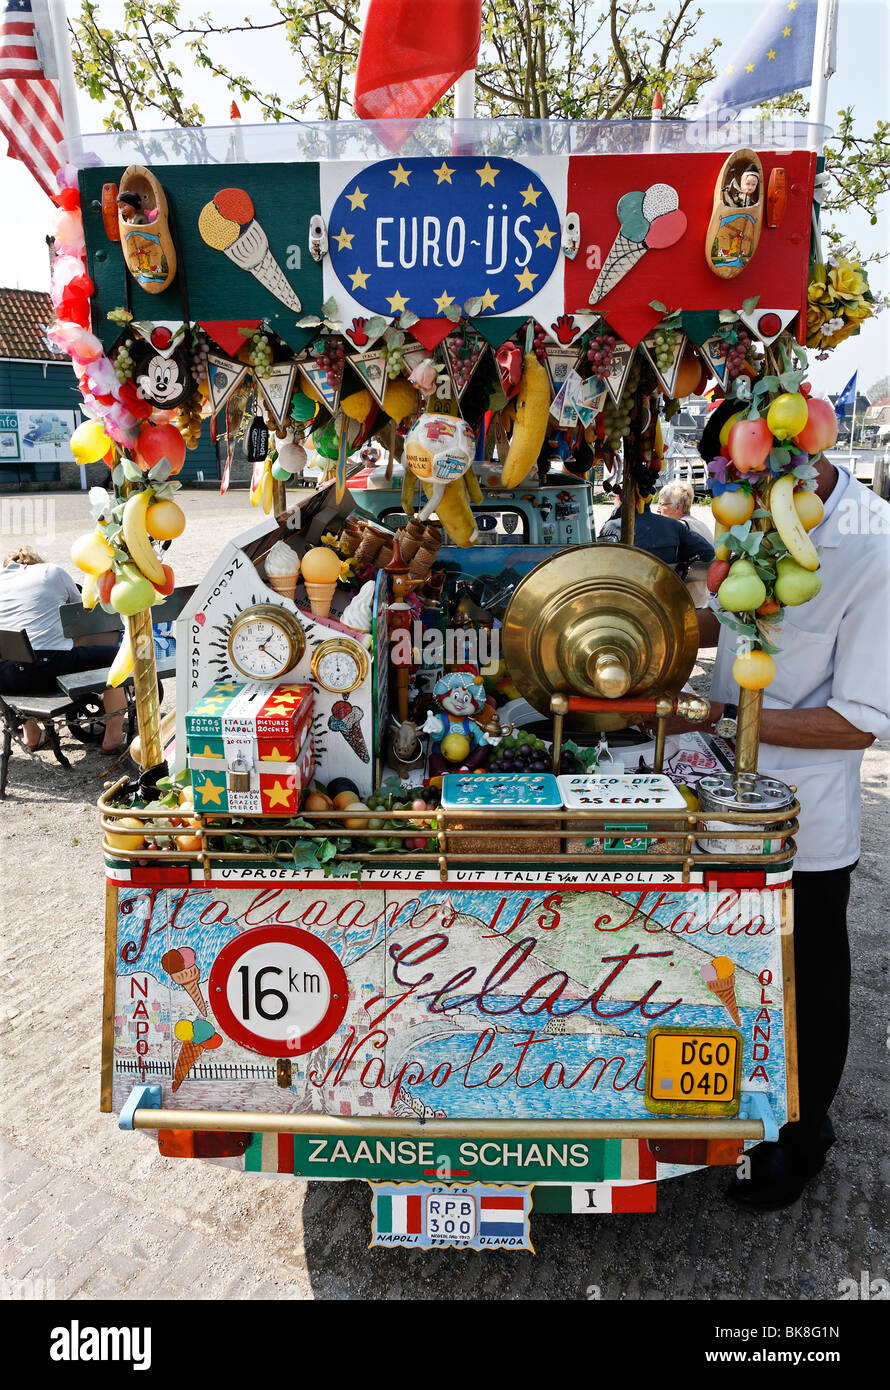 Picturesque decorated ice-cream cart with Italian ice cream, open-air museum Zaanse Schans, Zaanstadt, province of North Hollan Stock Photo